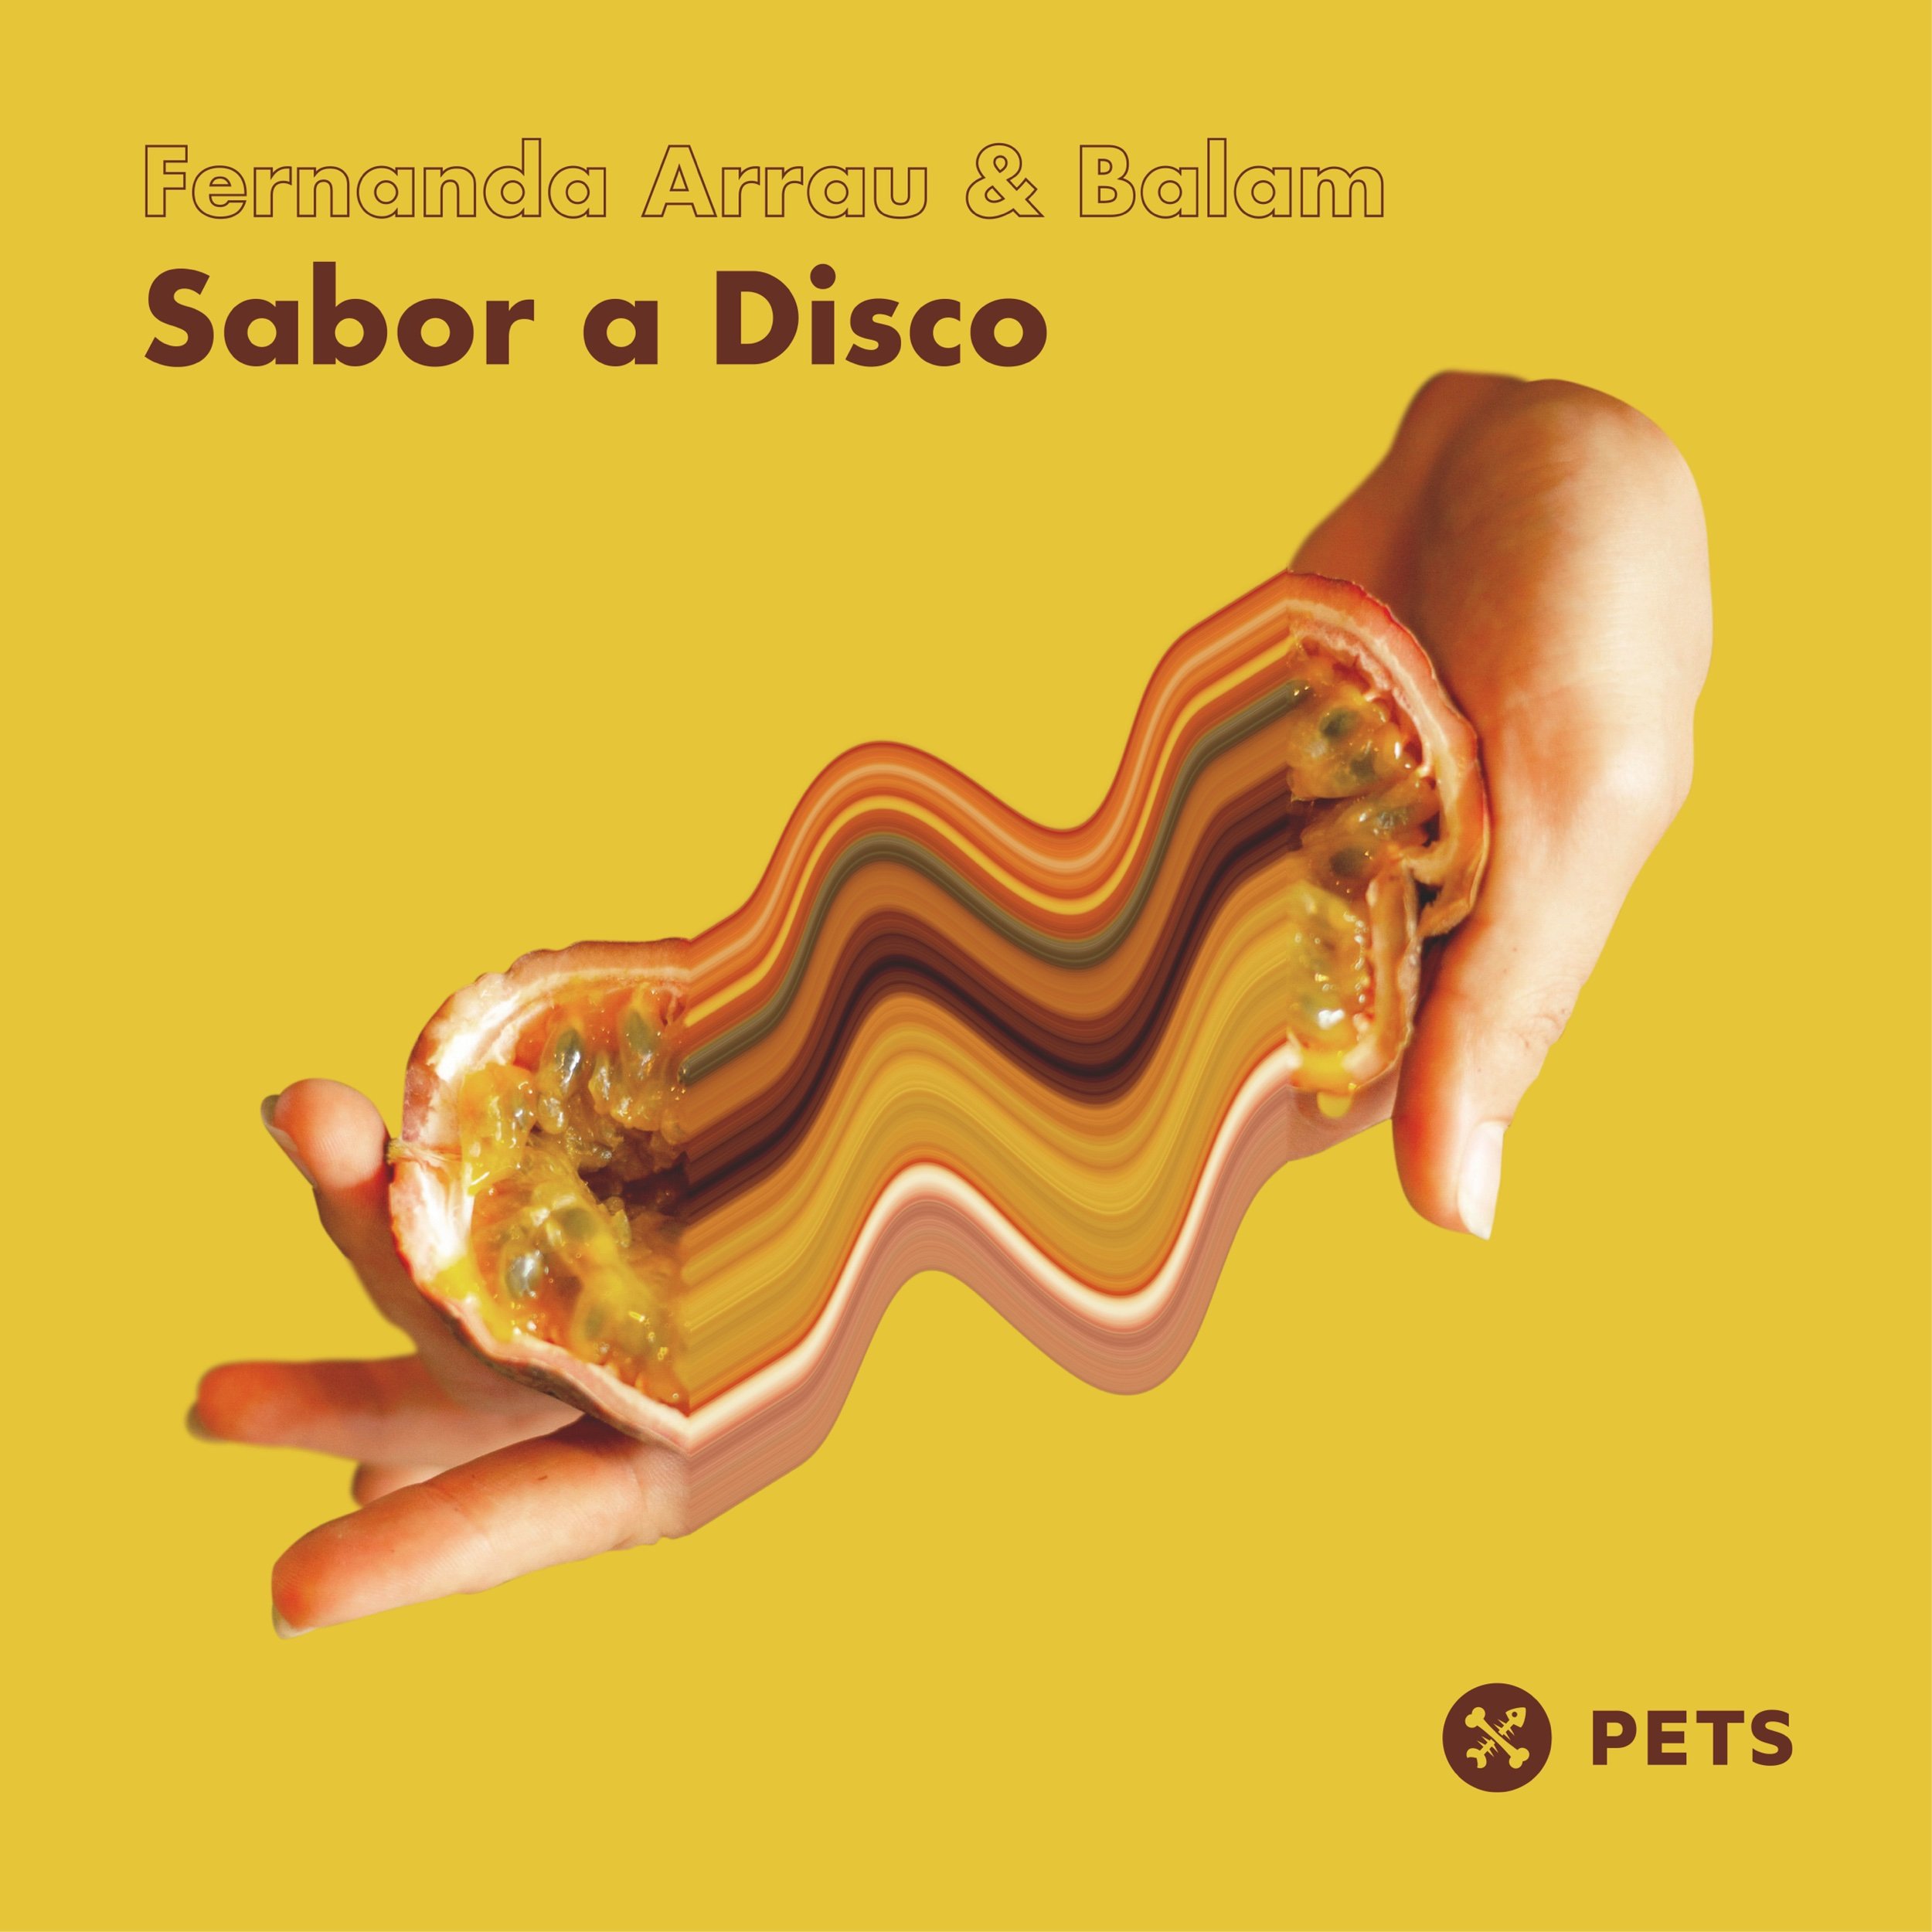 Fernanda Arrau & Balam - Sabor a Disco [PETS162] 